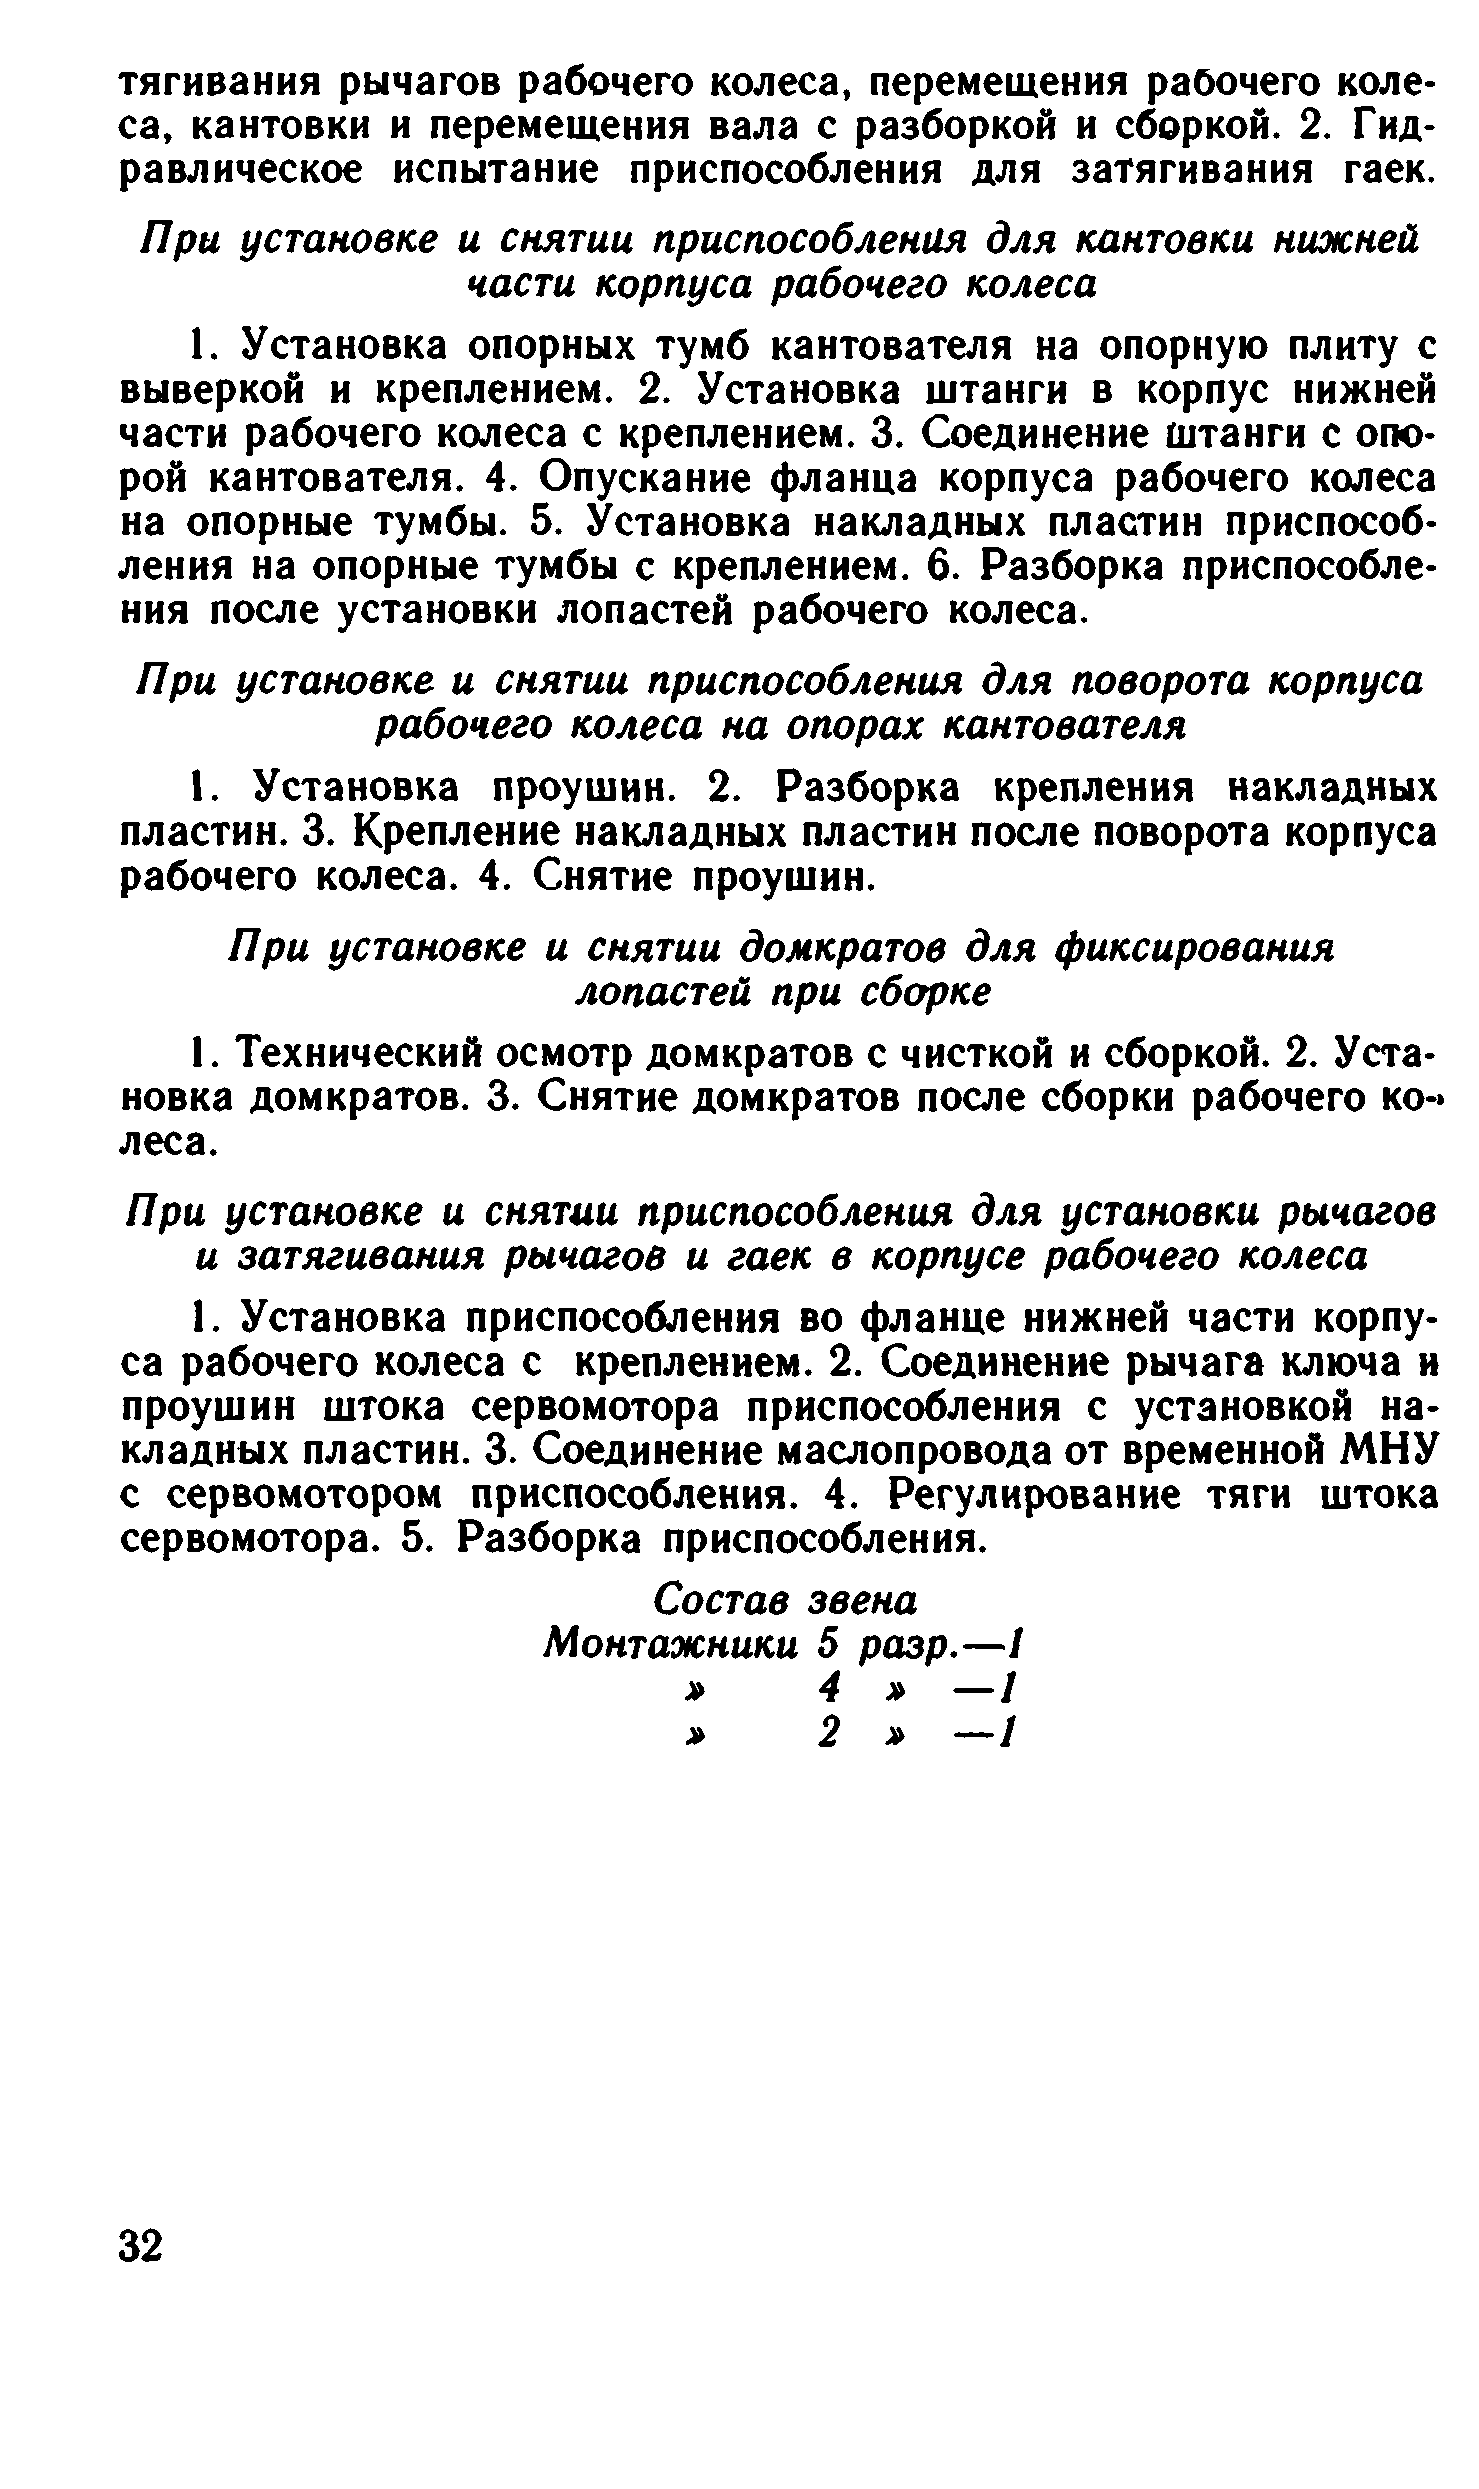 ВНиР В17-2